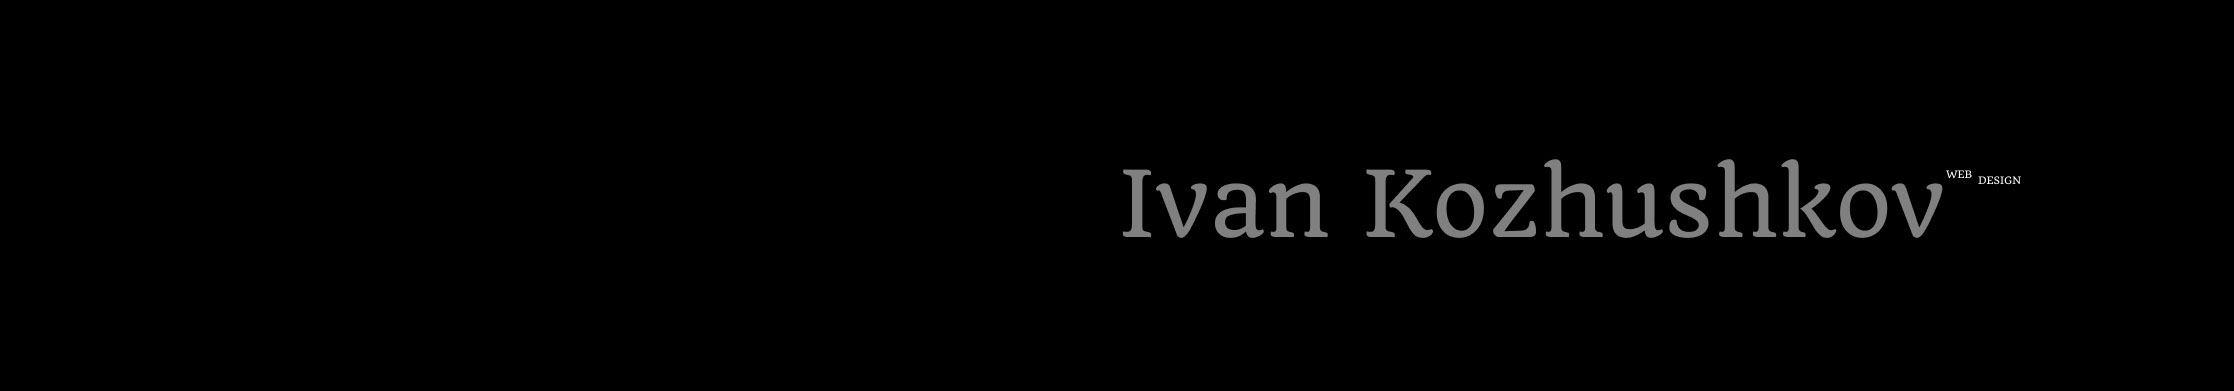 Ivan Kozhushkov's profile banner